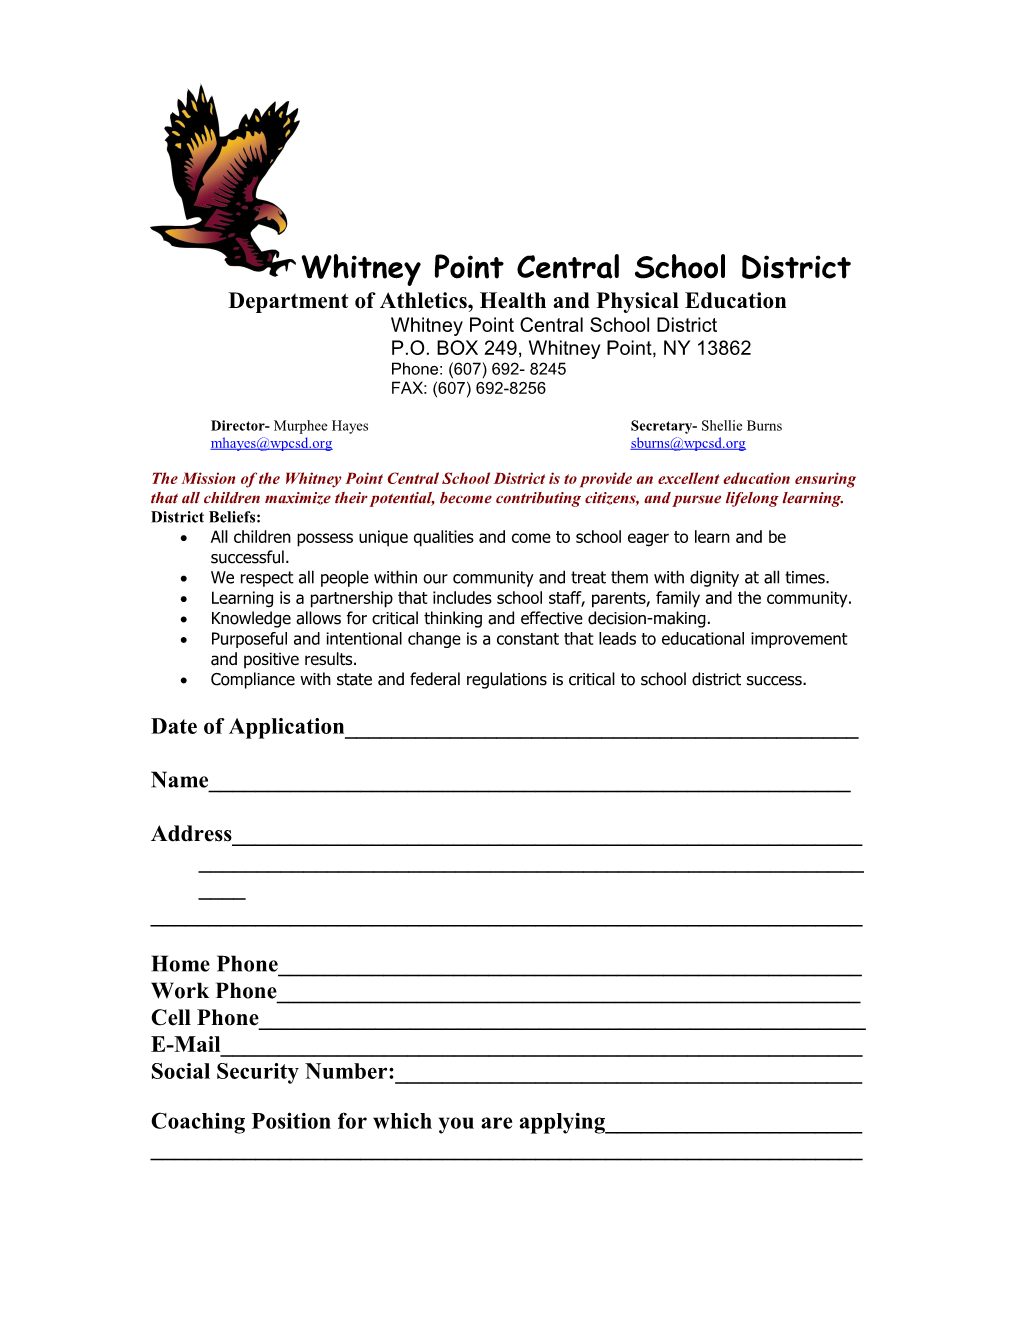 Whitney Point Coaching Application